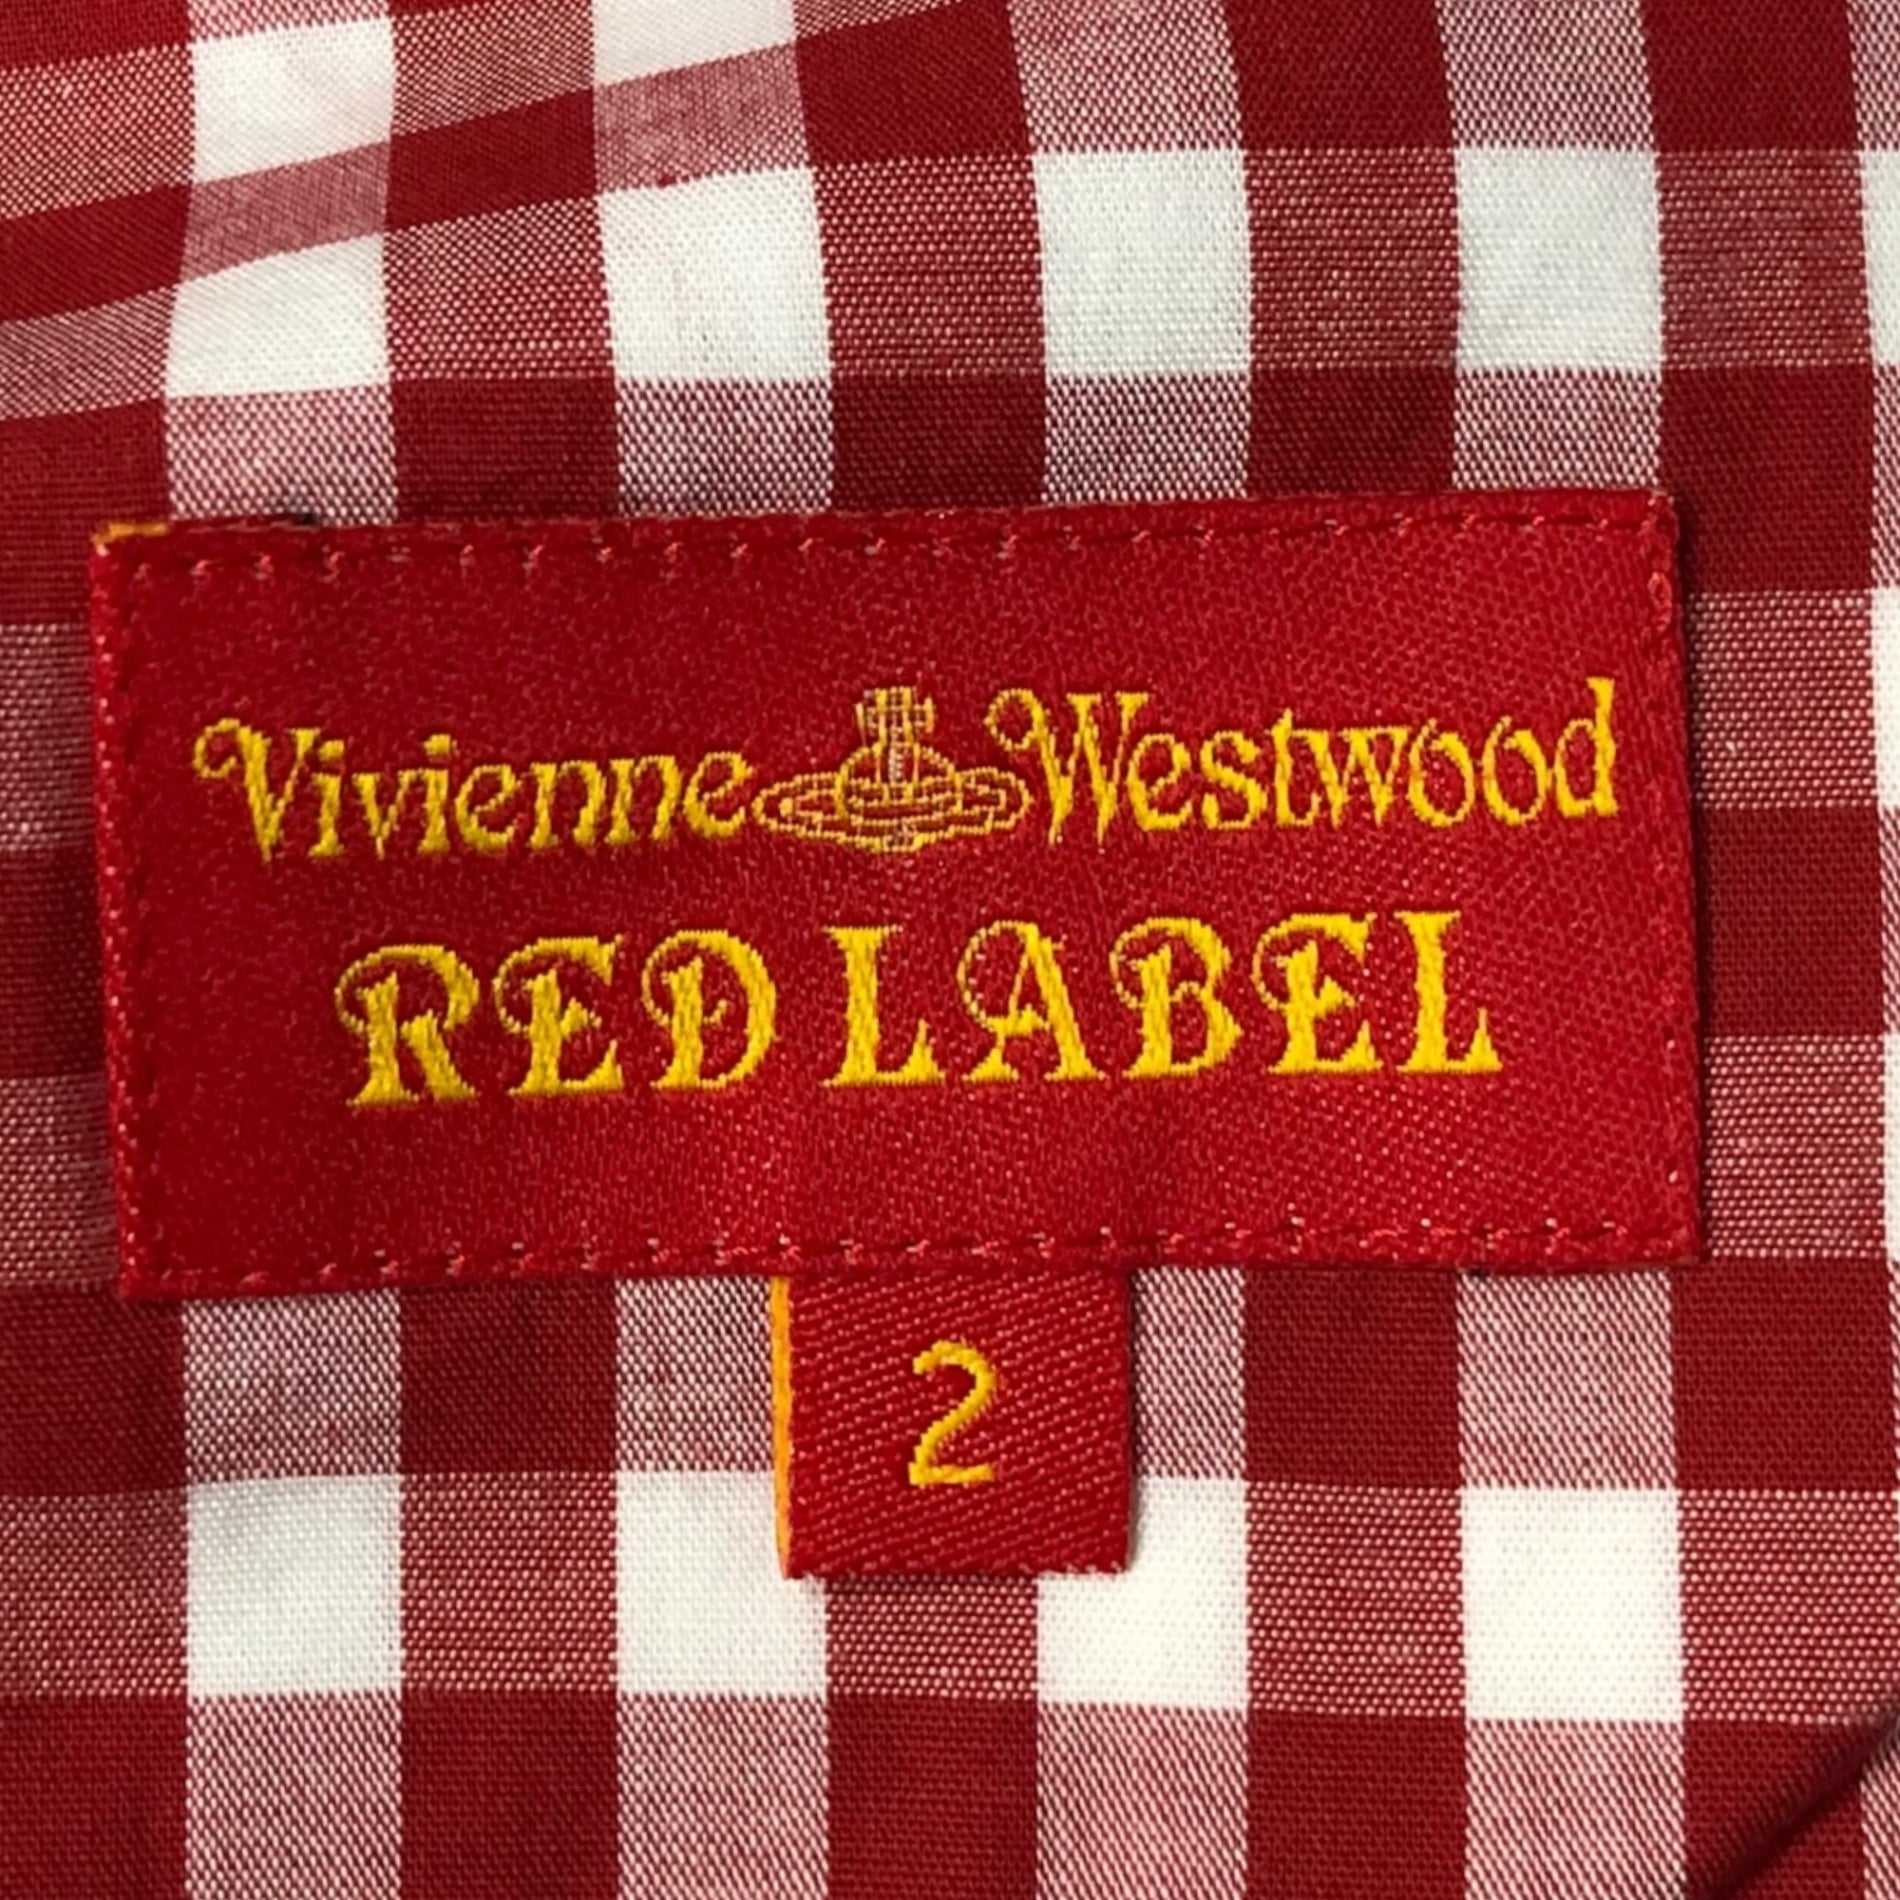 Vivienne Westwood RED LABEL(ヴィヴィアンウエストウッドレッドレーベル) Orbro logo gingham check big color dress オーブ ロゴ ギンガム チェック  ワンピース 6116M 357-56054 2(M程度) レッド×ホワイト 00’s ノースリーブ フレンチ 刺繍 半袖